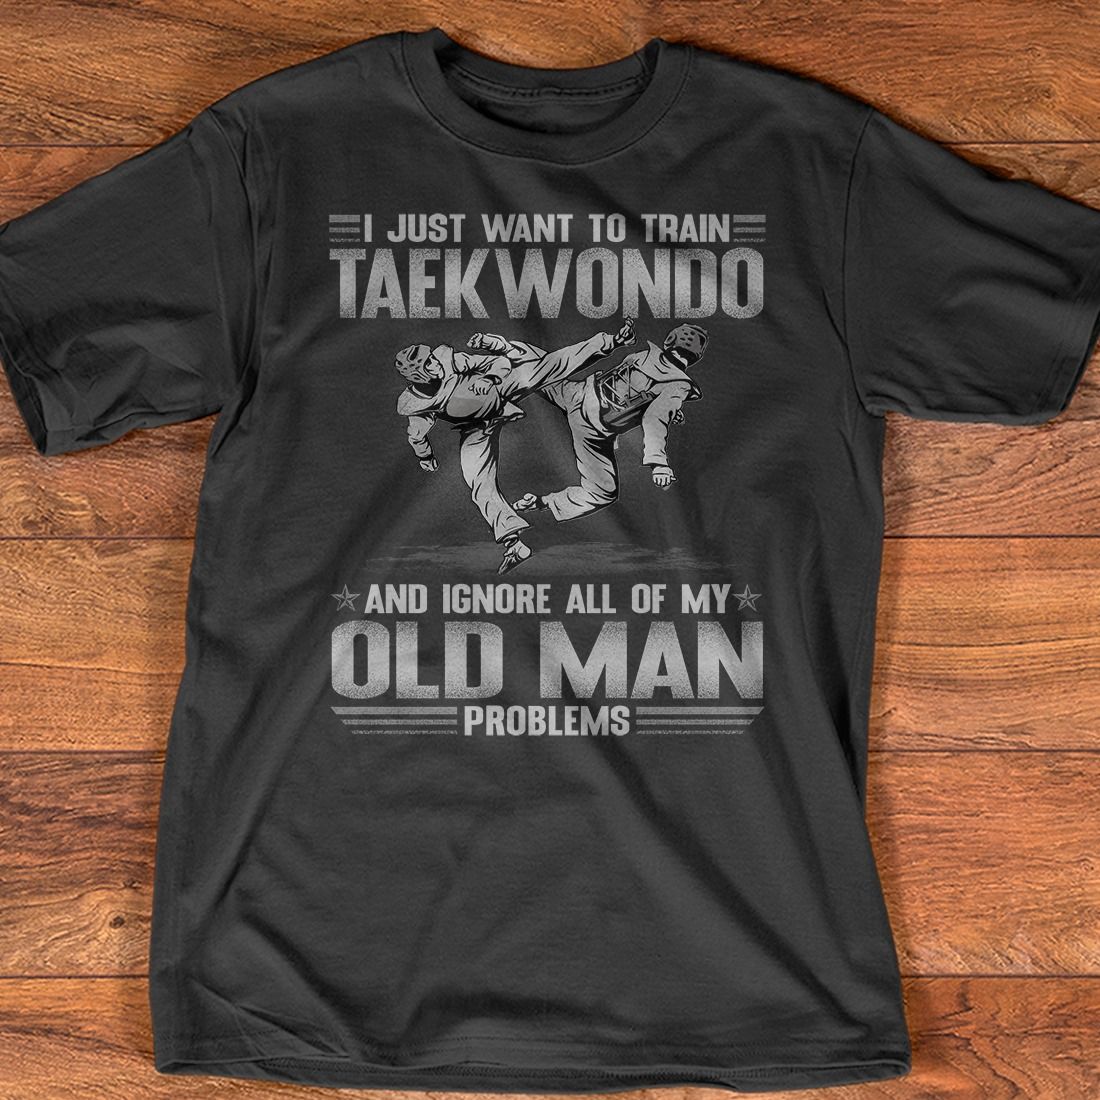 Taekwondo Man - I just want to train taekwondo and ignore all of my old man problems